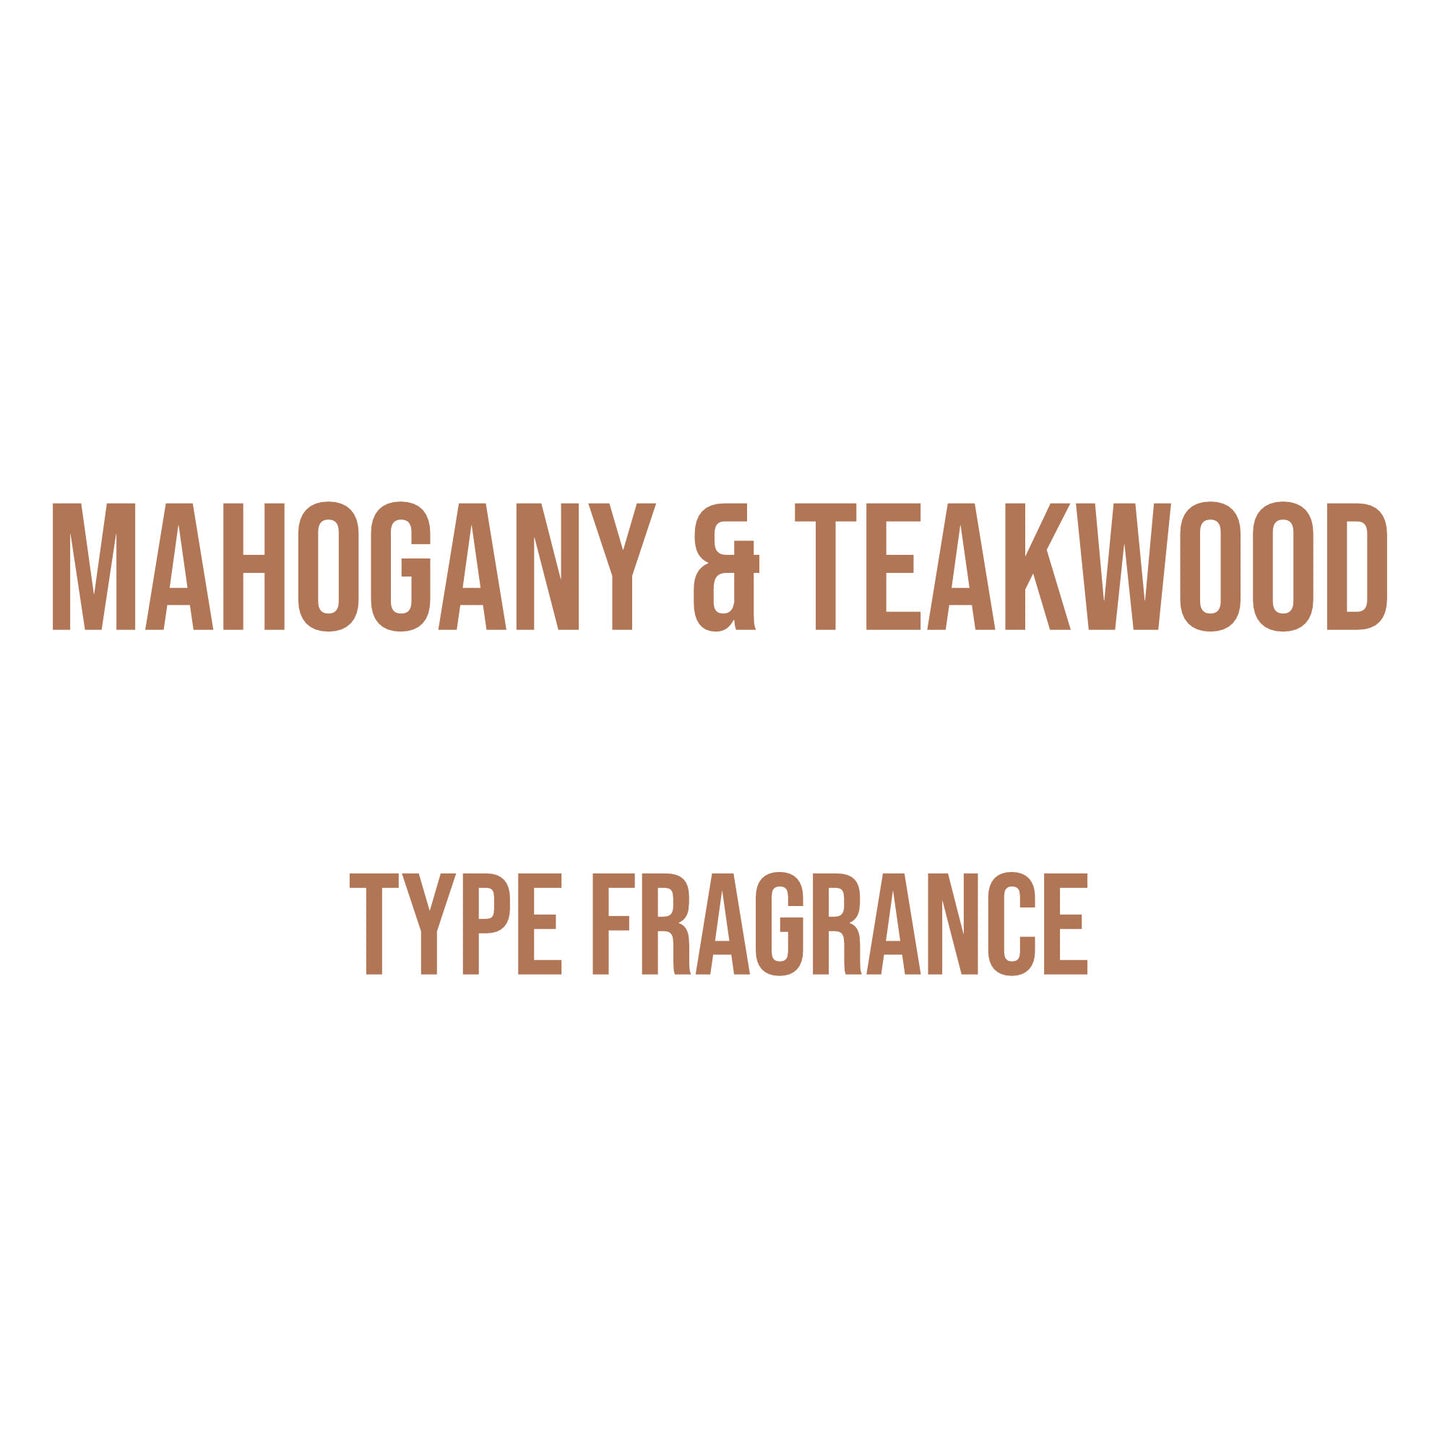 Mahogany & Teakwood Type Fragrance